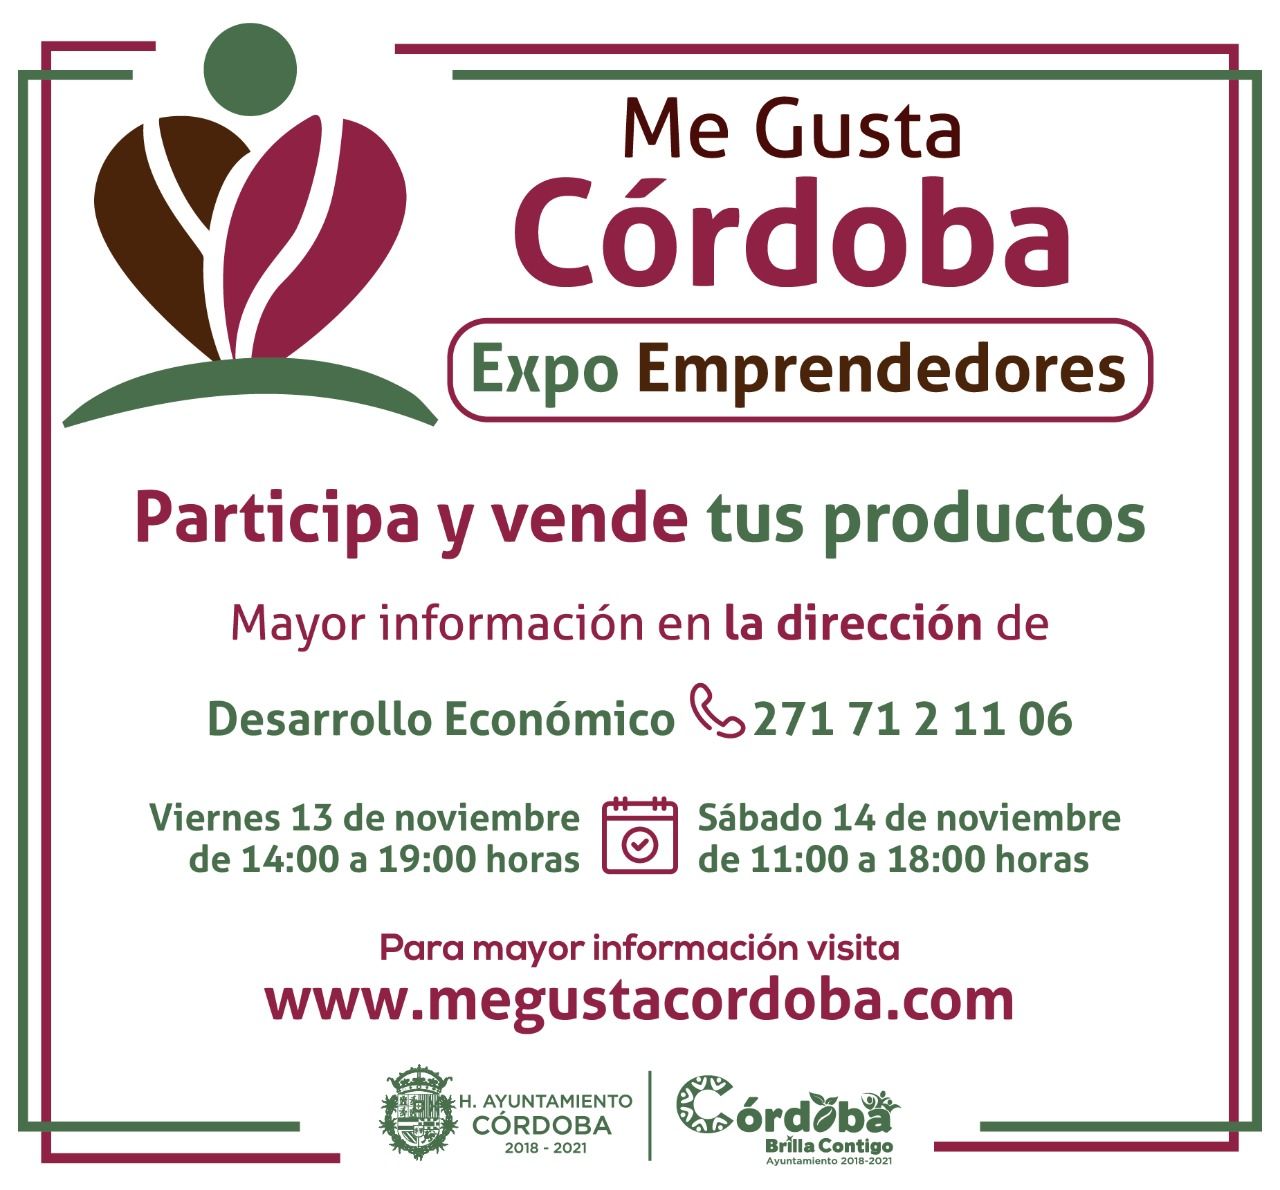 Invitan a emprendedores y MiPyMes a participar en expo Me Gusta Córdoba